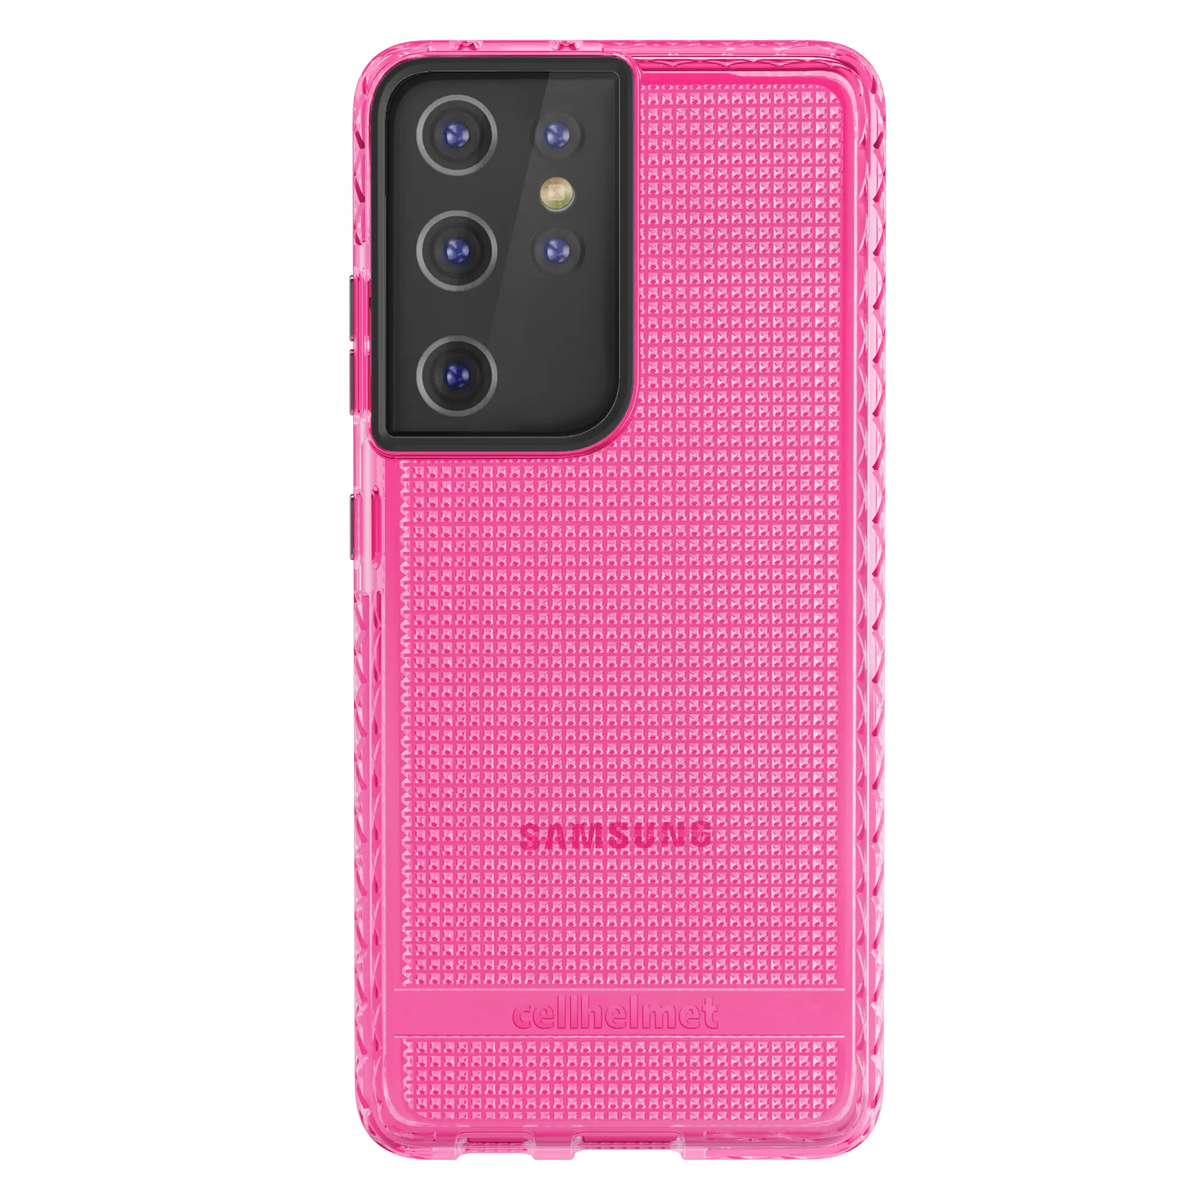 Altitude X Series for Samsung Galaxy S21 Ultra  - Pink - Case -  - cellhelmet